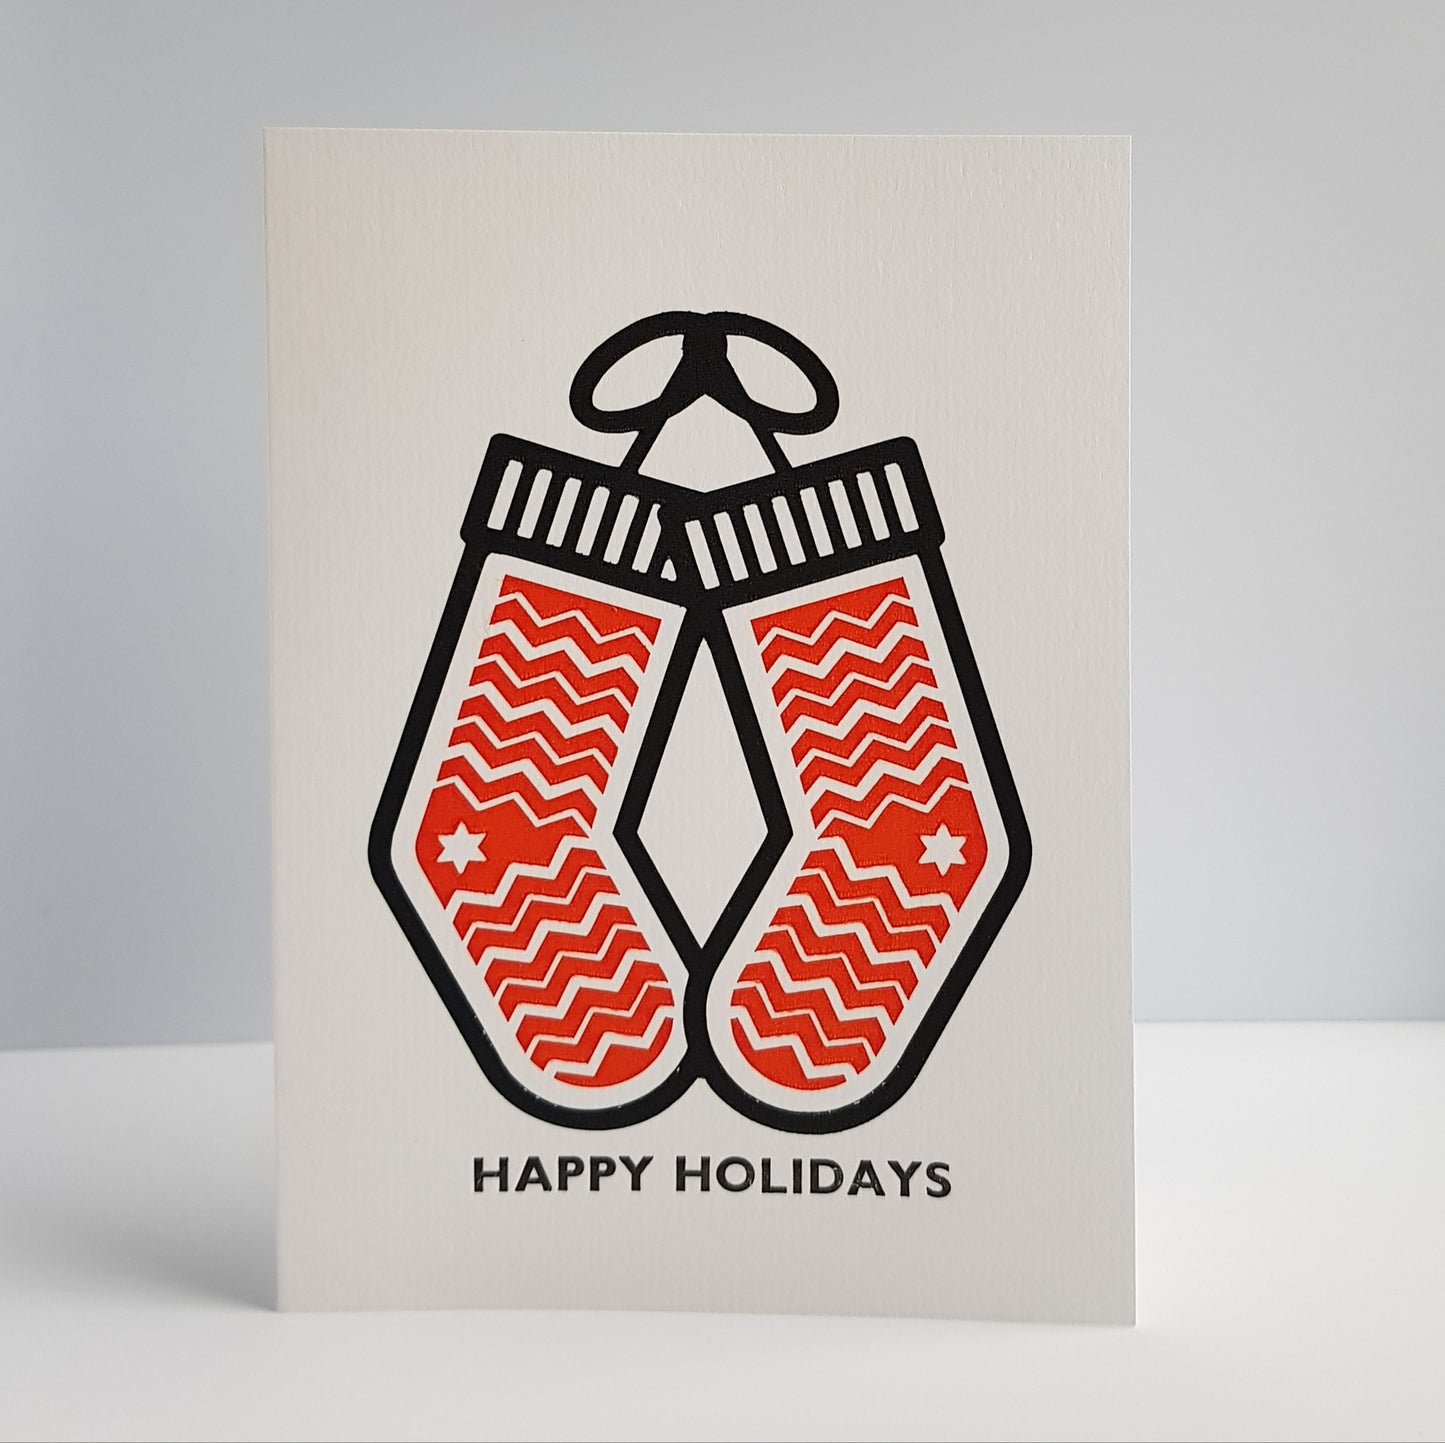 ORANGE STOCKINGS "HAPPY HOLIDAYS" CHRISTMAS CARD